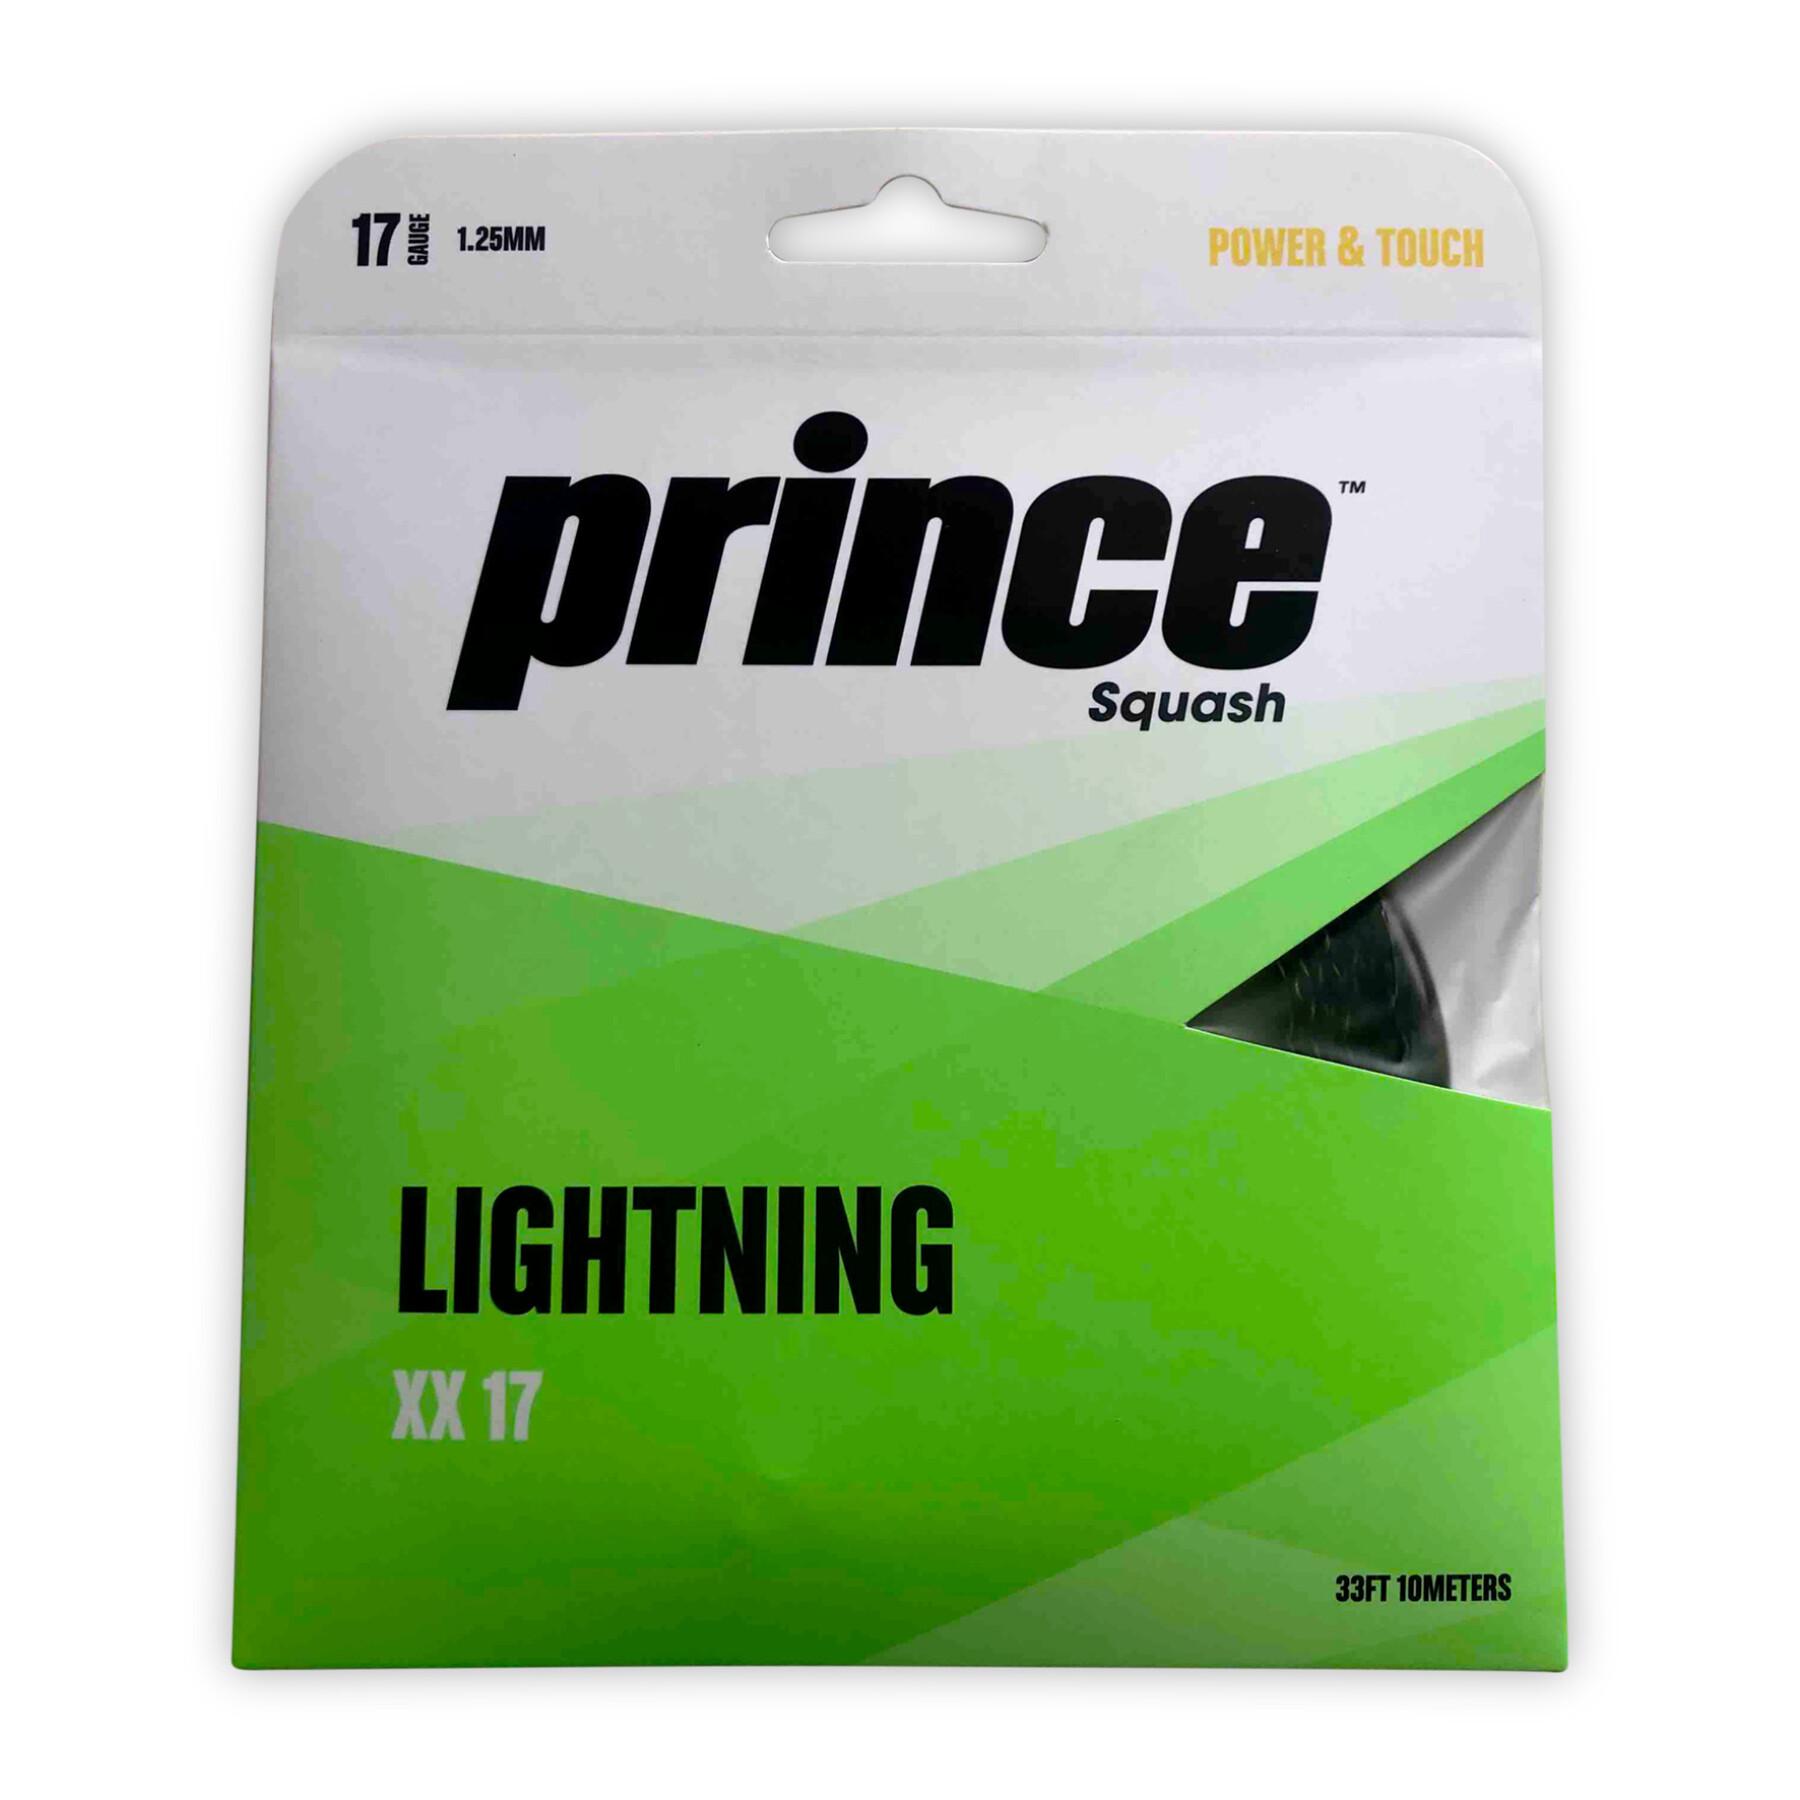 Sznurki do squasha Prince Lightning XX